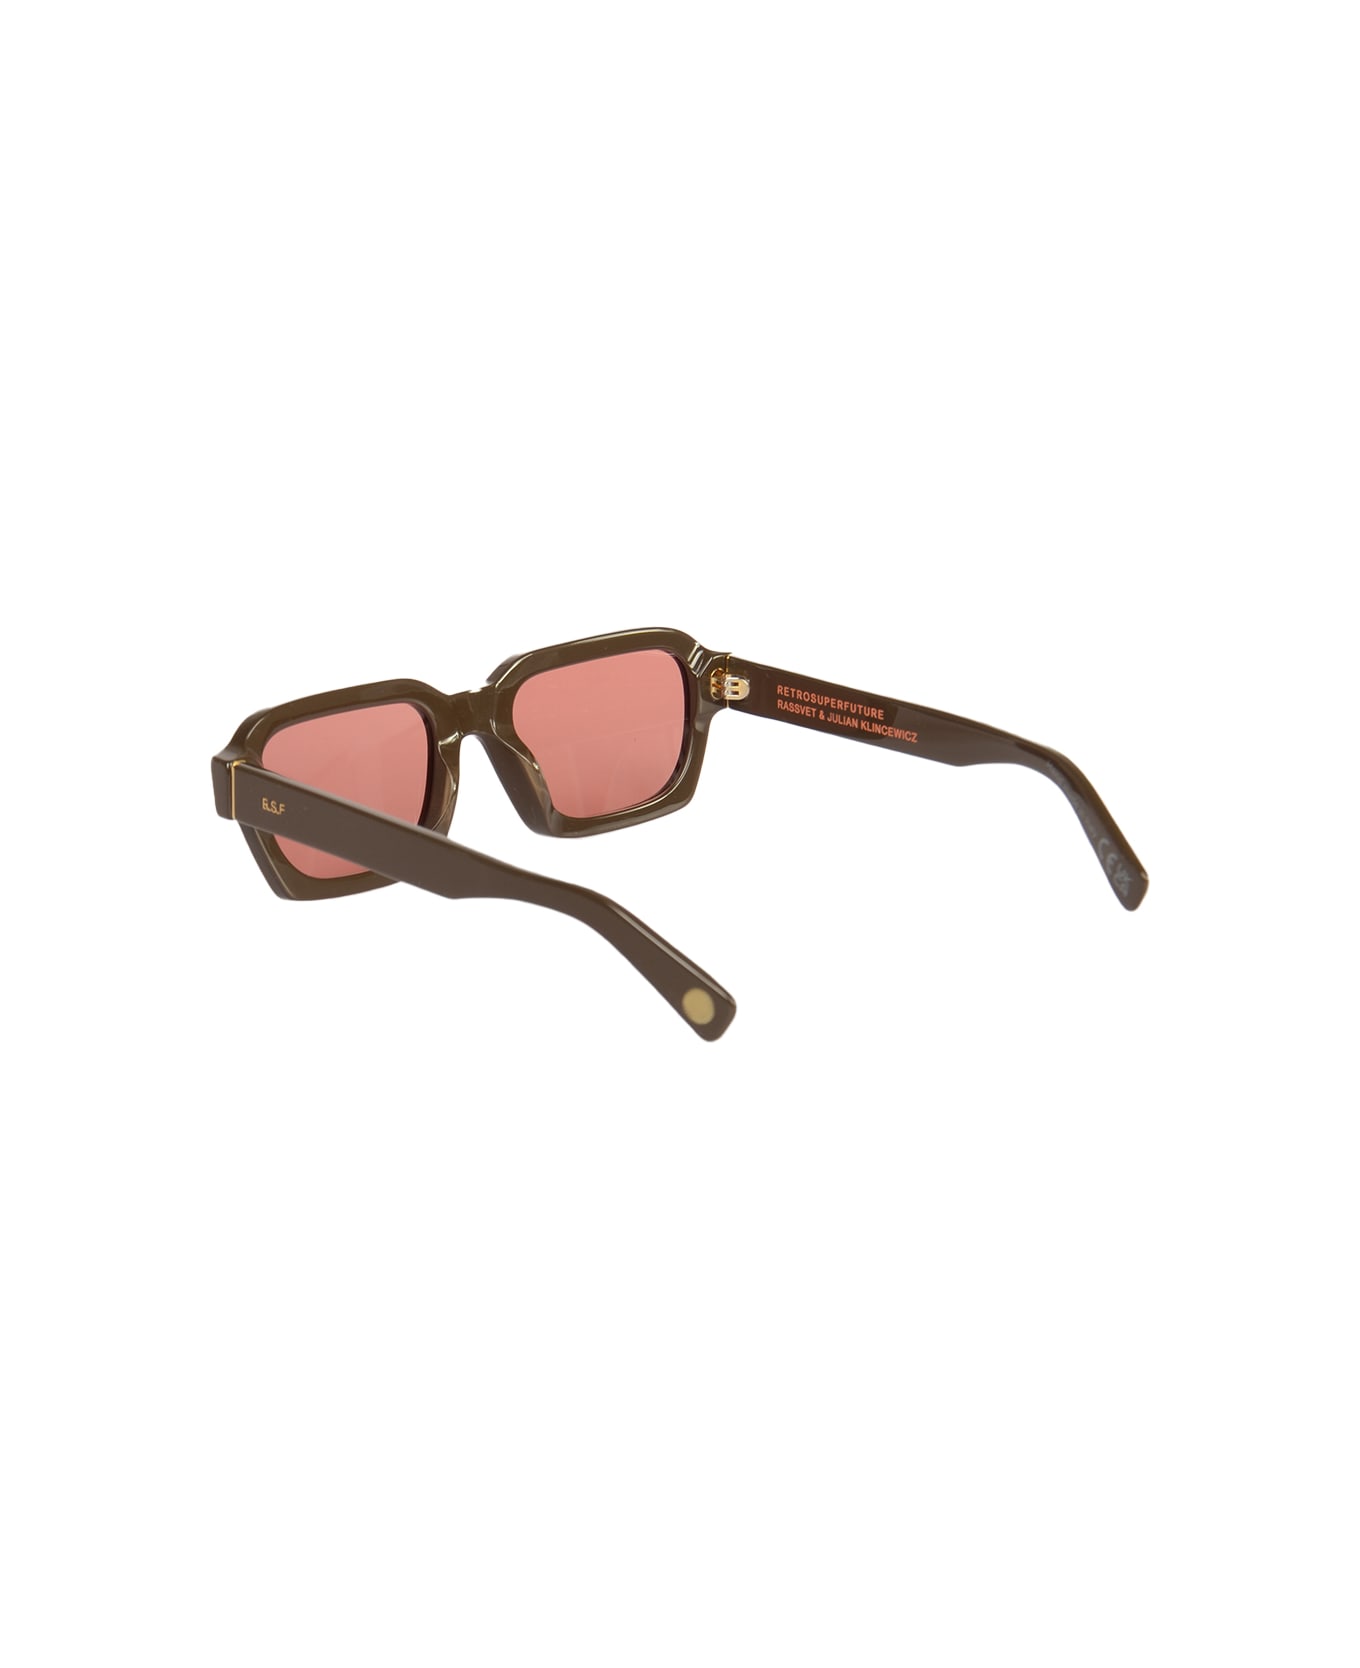 Rassvet Retro Super Future Sunglasses - Brown